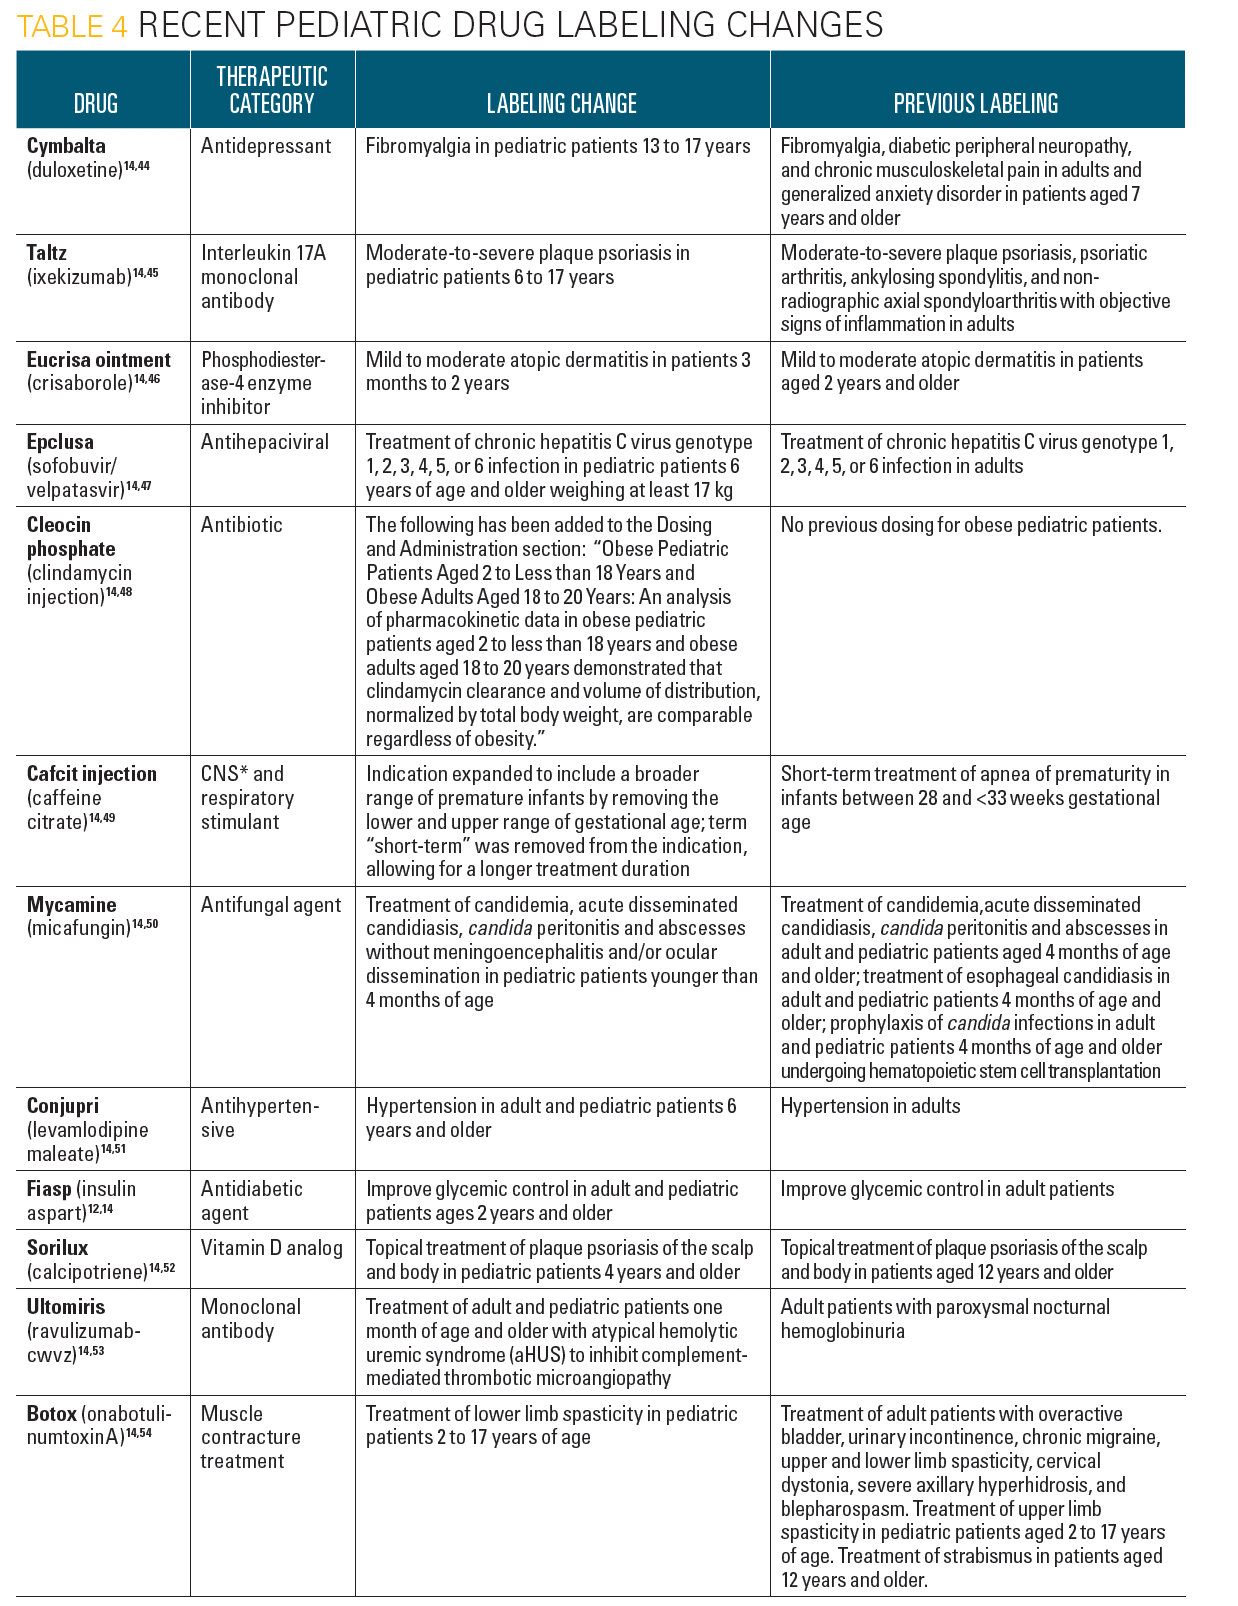 Table 4 - Recent pediatric drug labeling changes